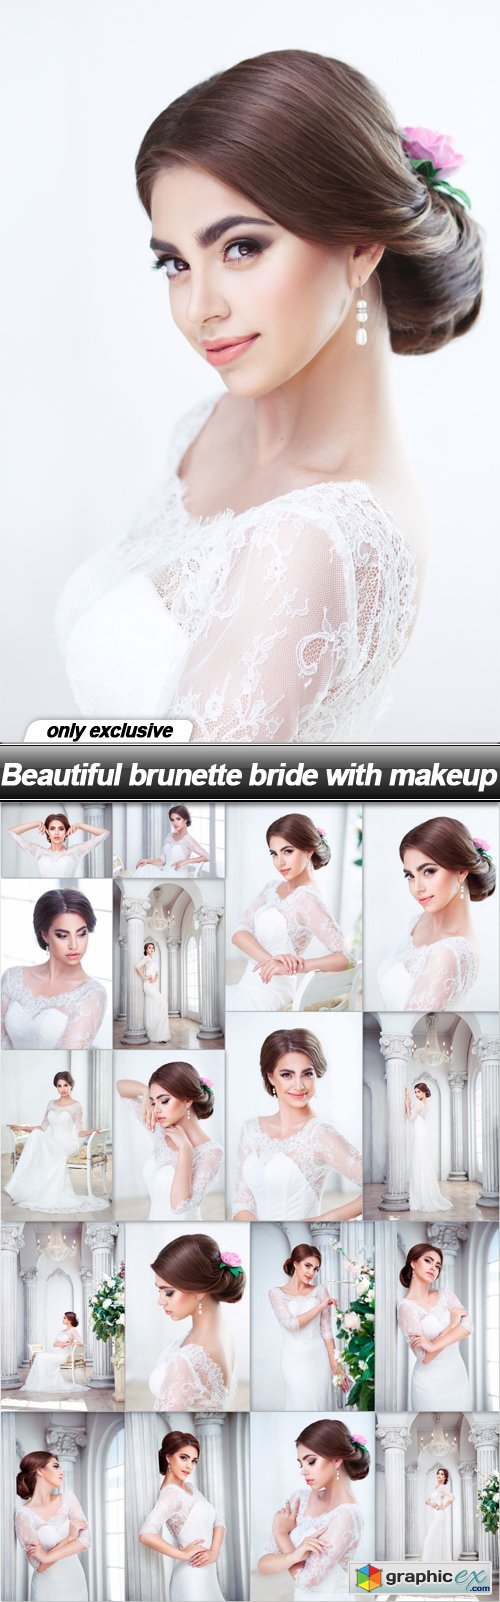 Beautiful brunette bride with makeup - 18 UHQ JPEG